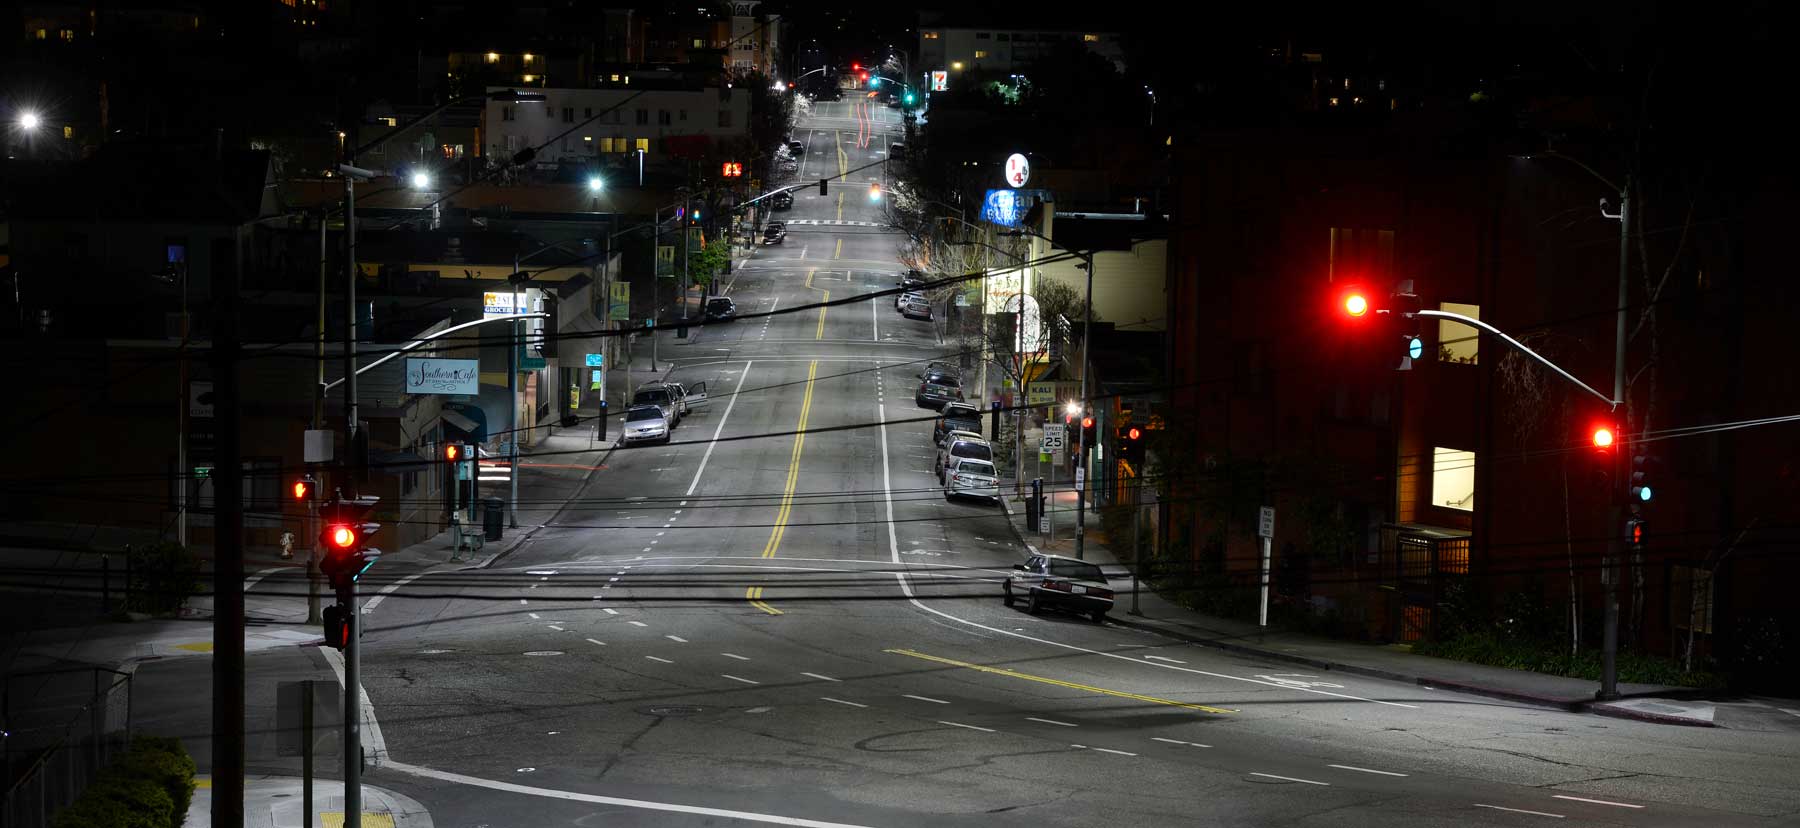 City street with street lights at night